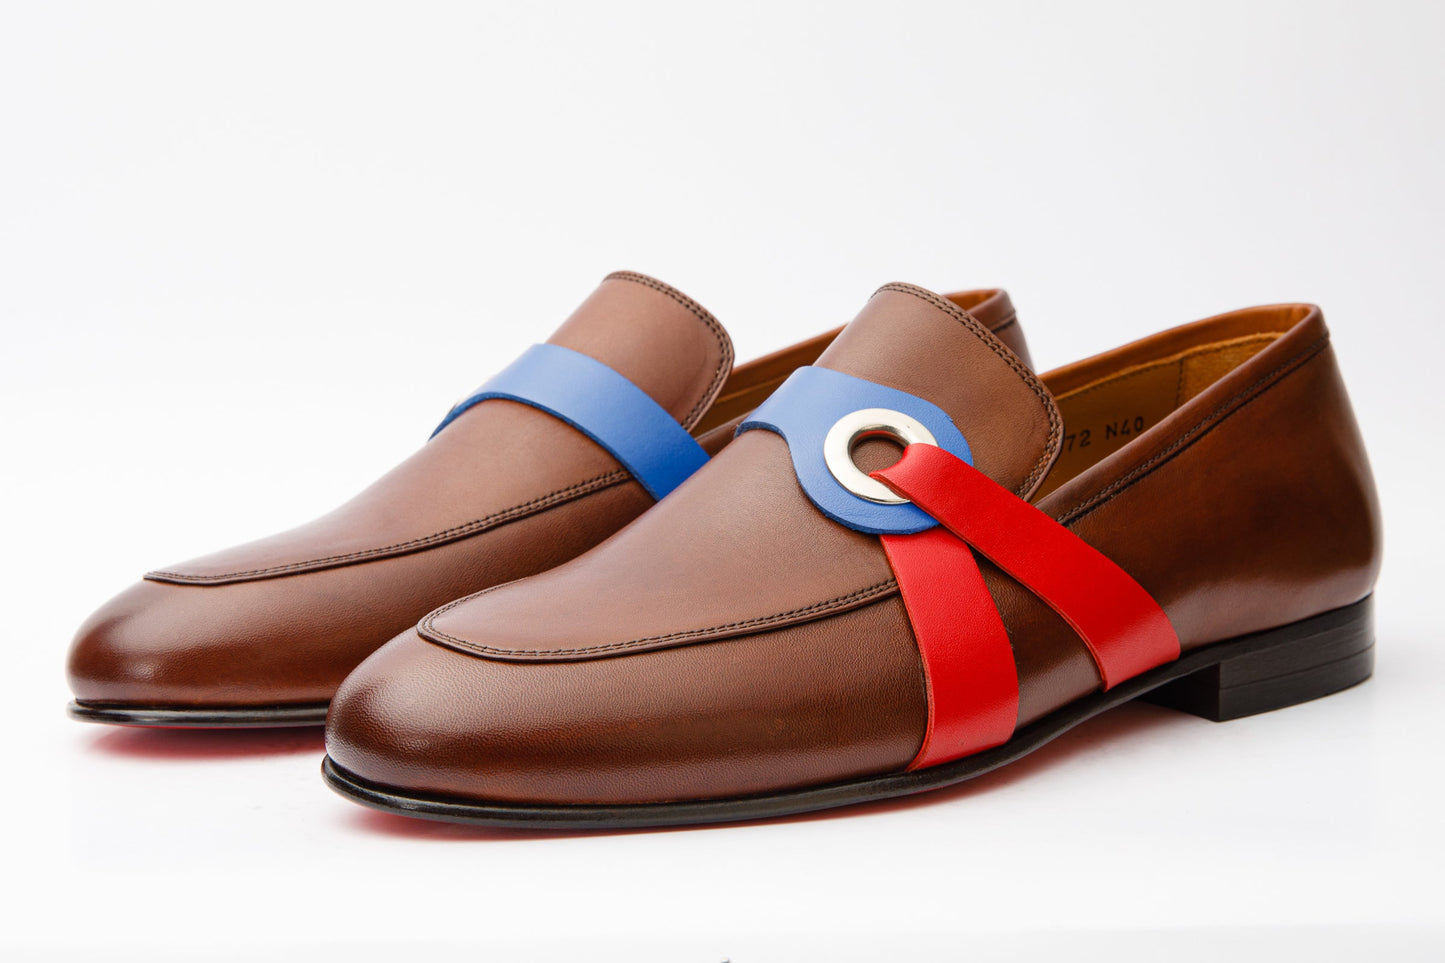 The Jackie Tan Bit Dress Loafer Limited Edition Men Shoe